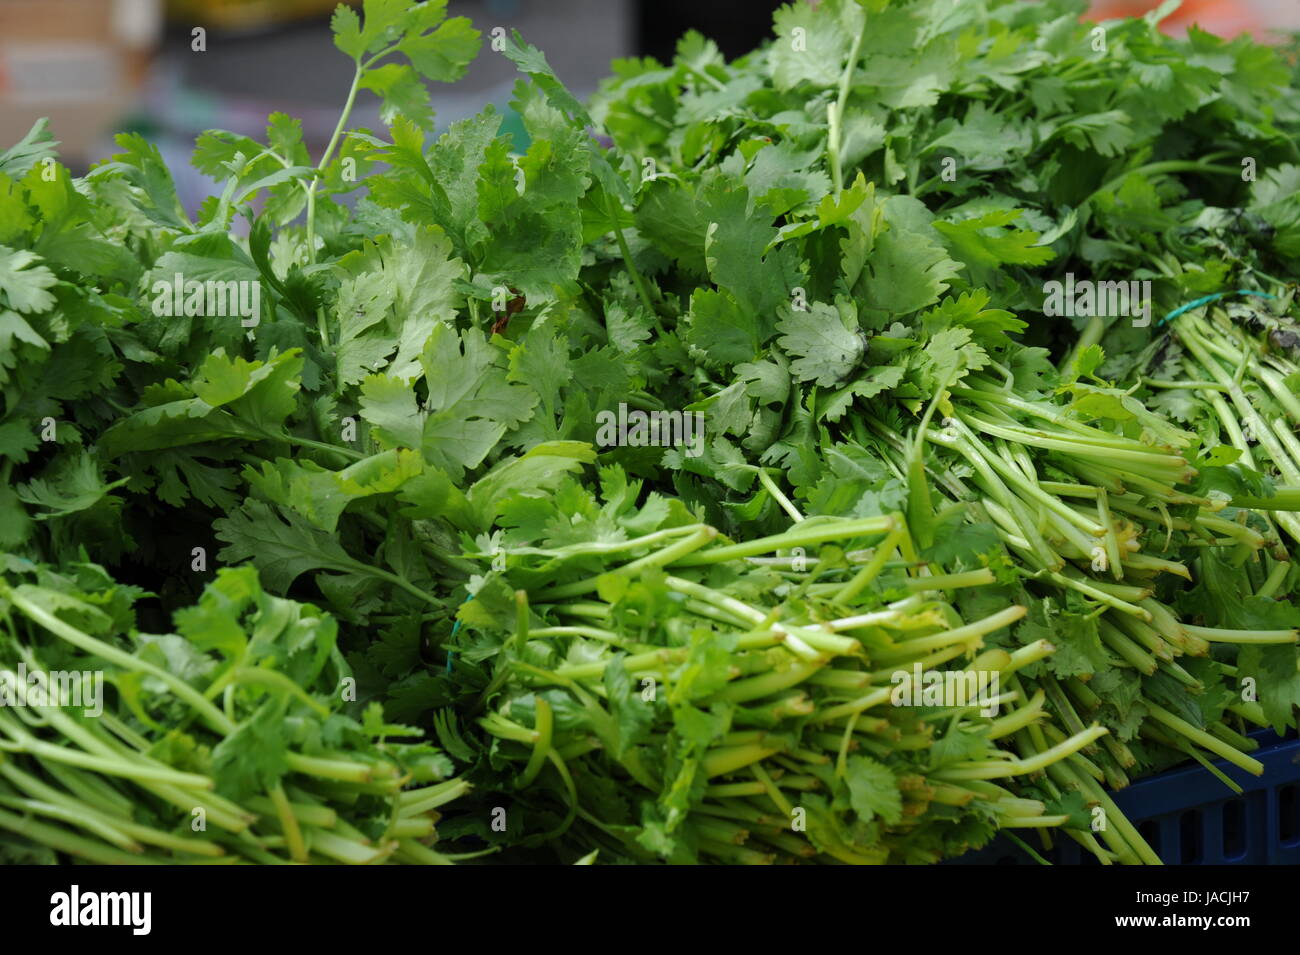 spain - weekly market - parsley Stock Photo